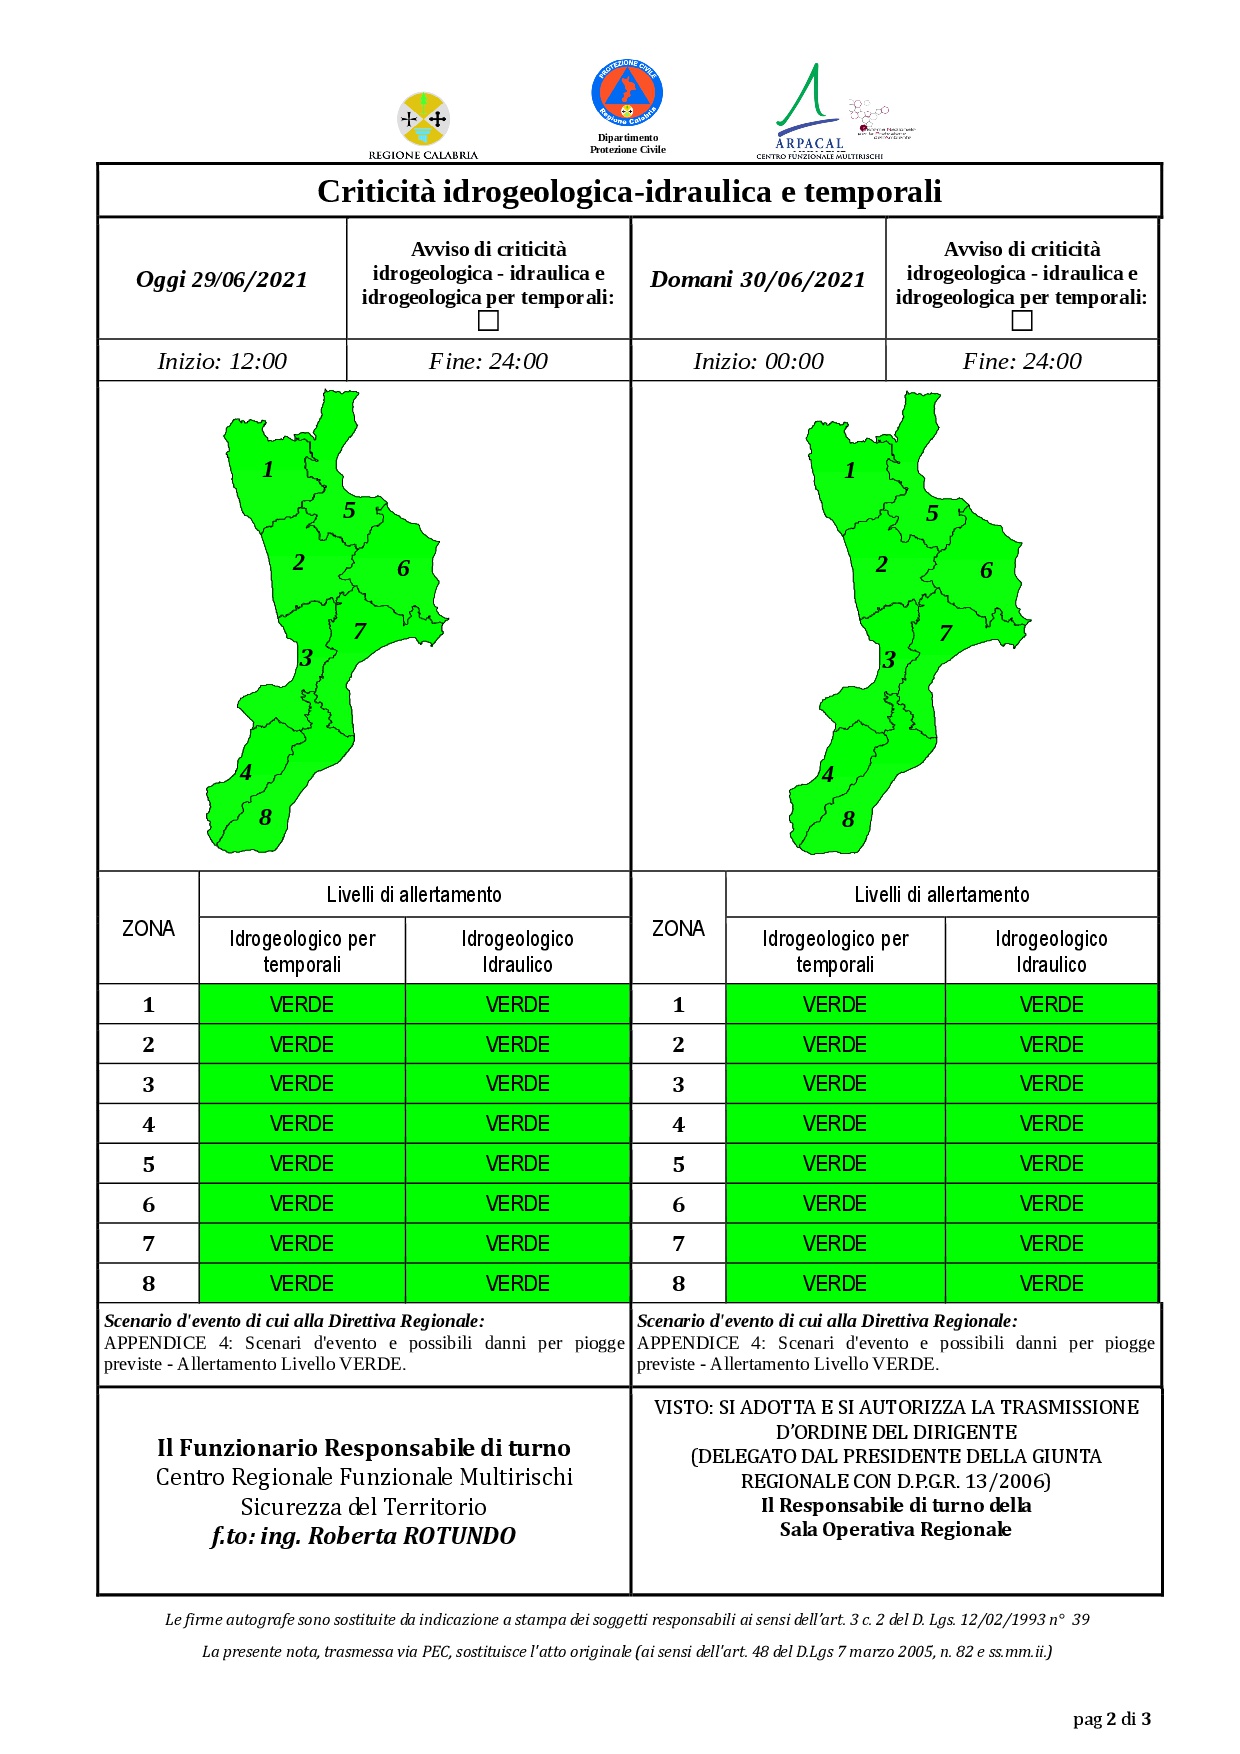 Criticità idrogeologica-idraulica e temporali in Calabria 29-06-2021